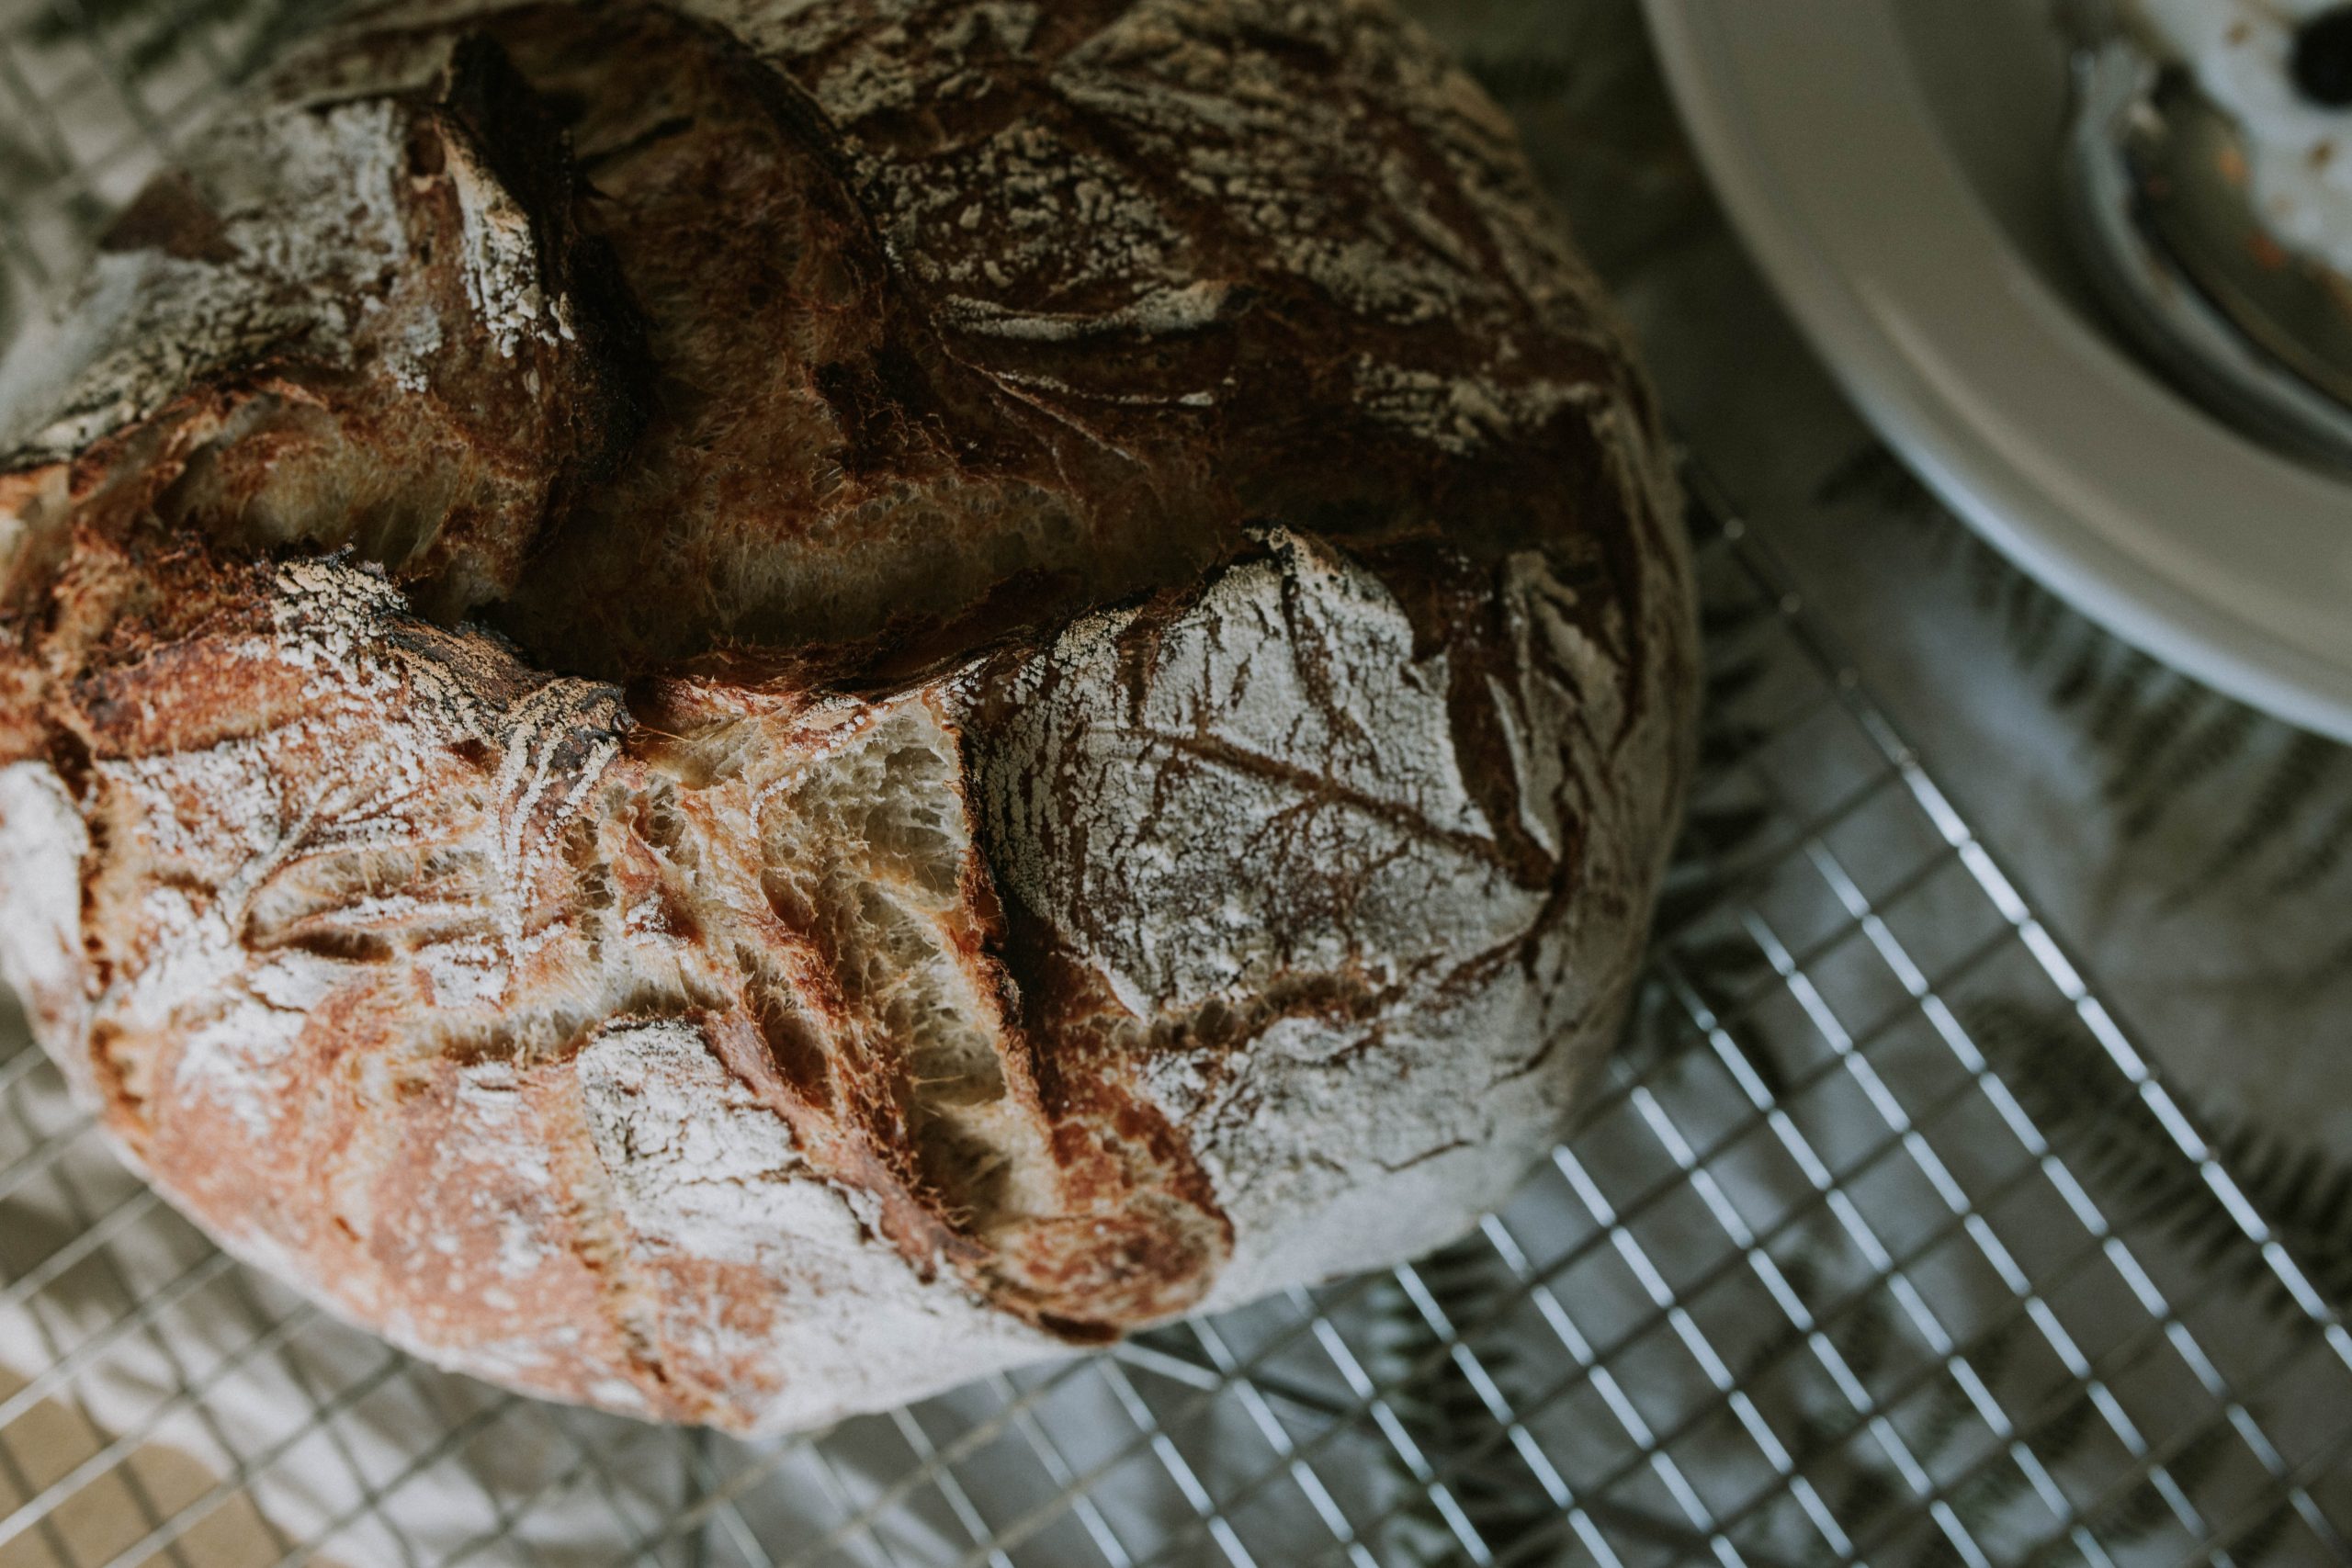 Sourdough Bread Recipes